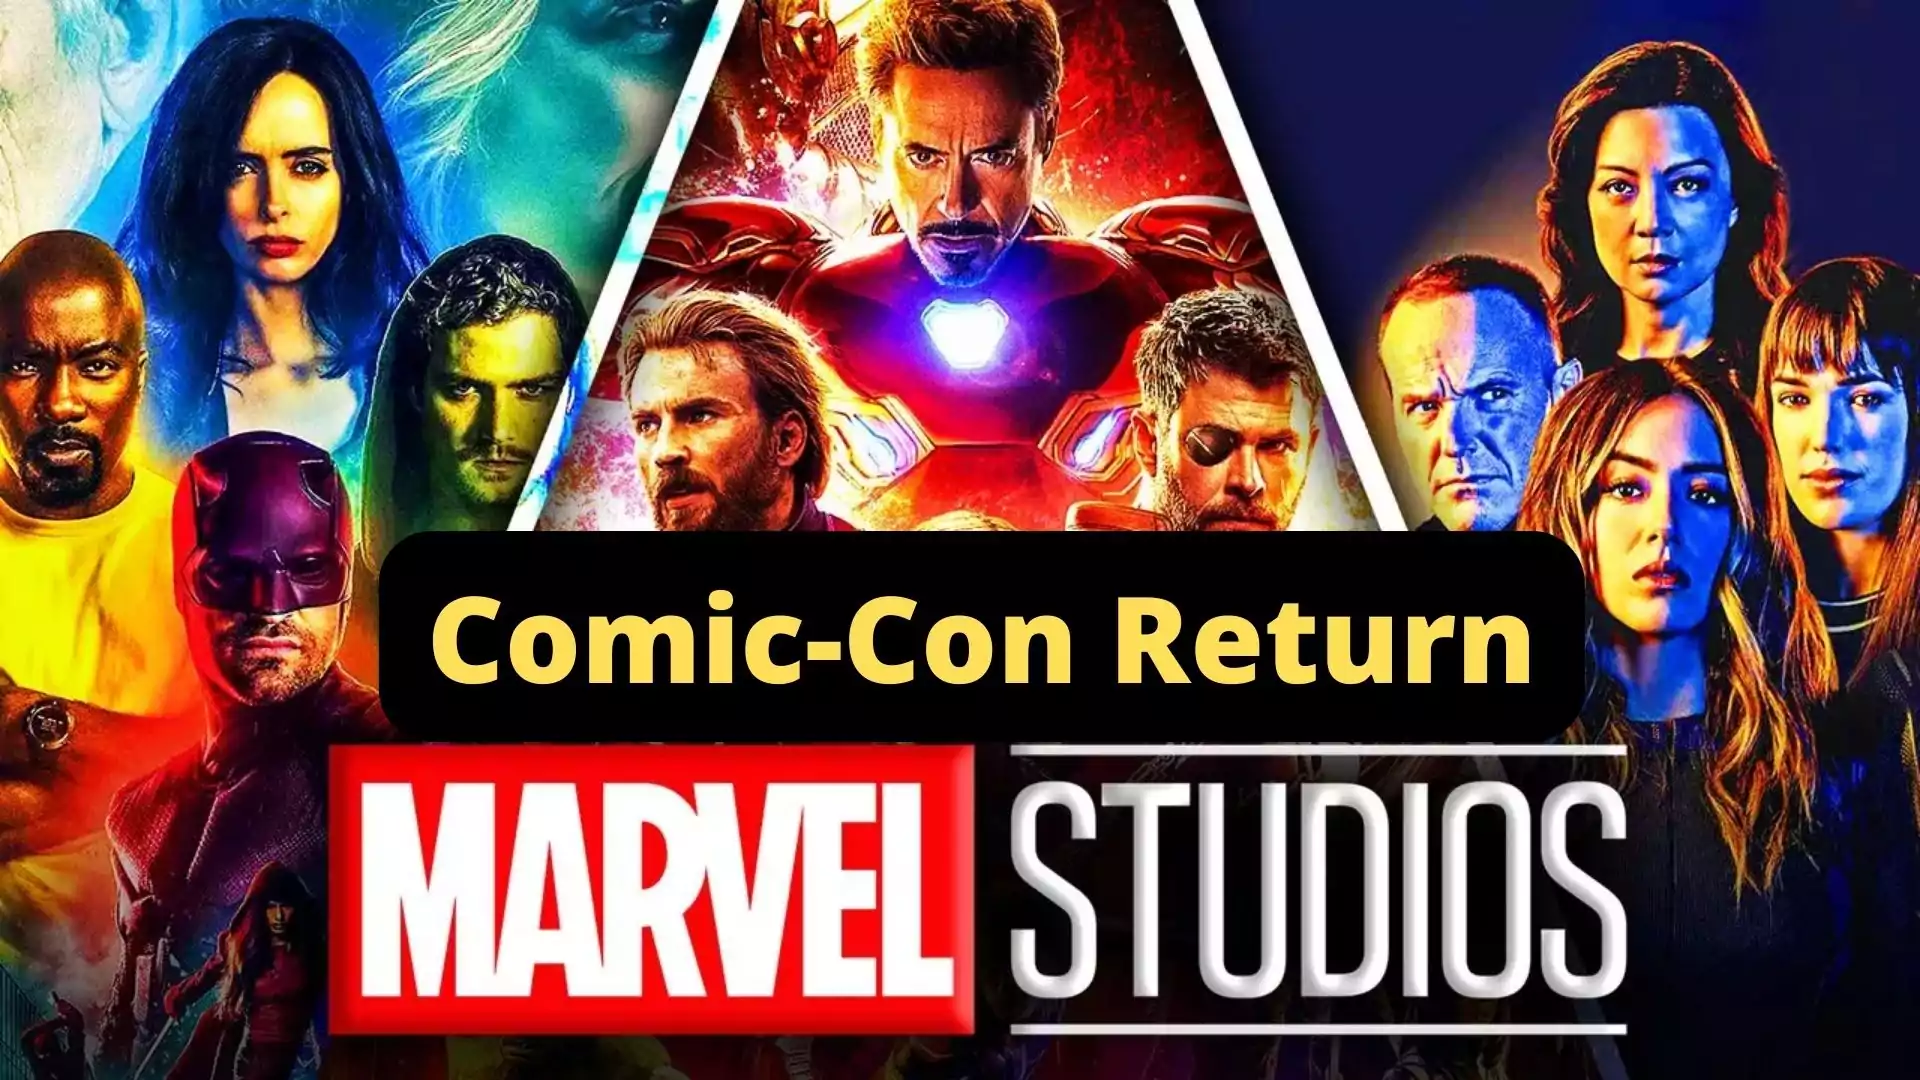 Marvel Studios will be back at Comic-Con Return